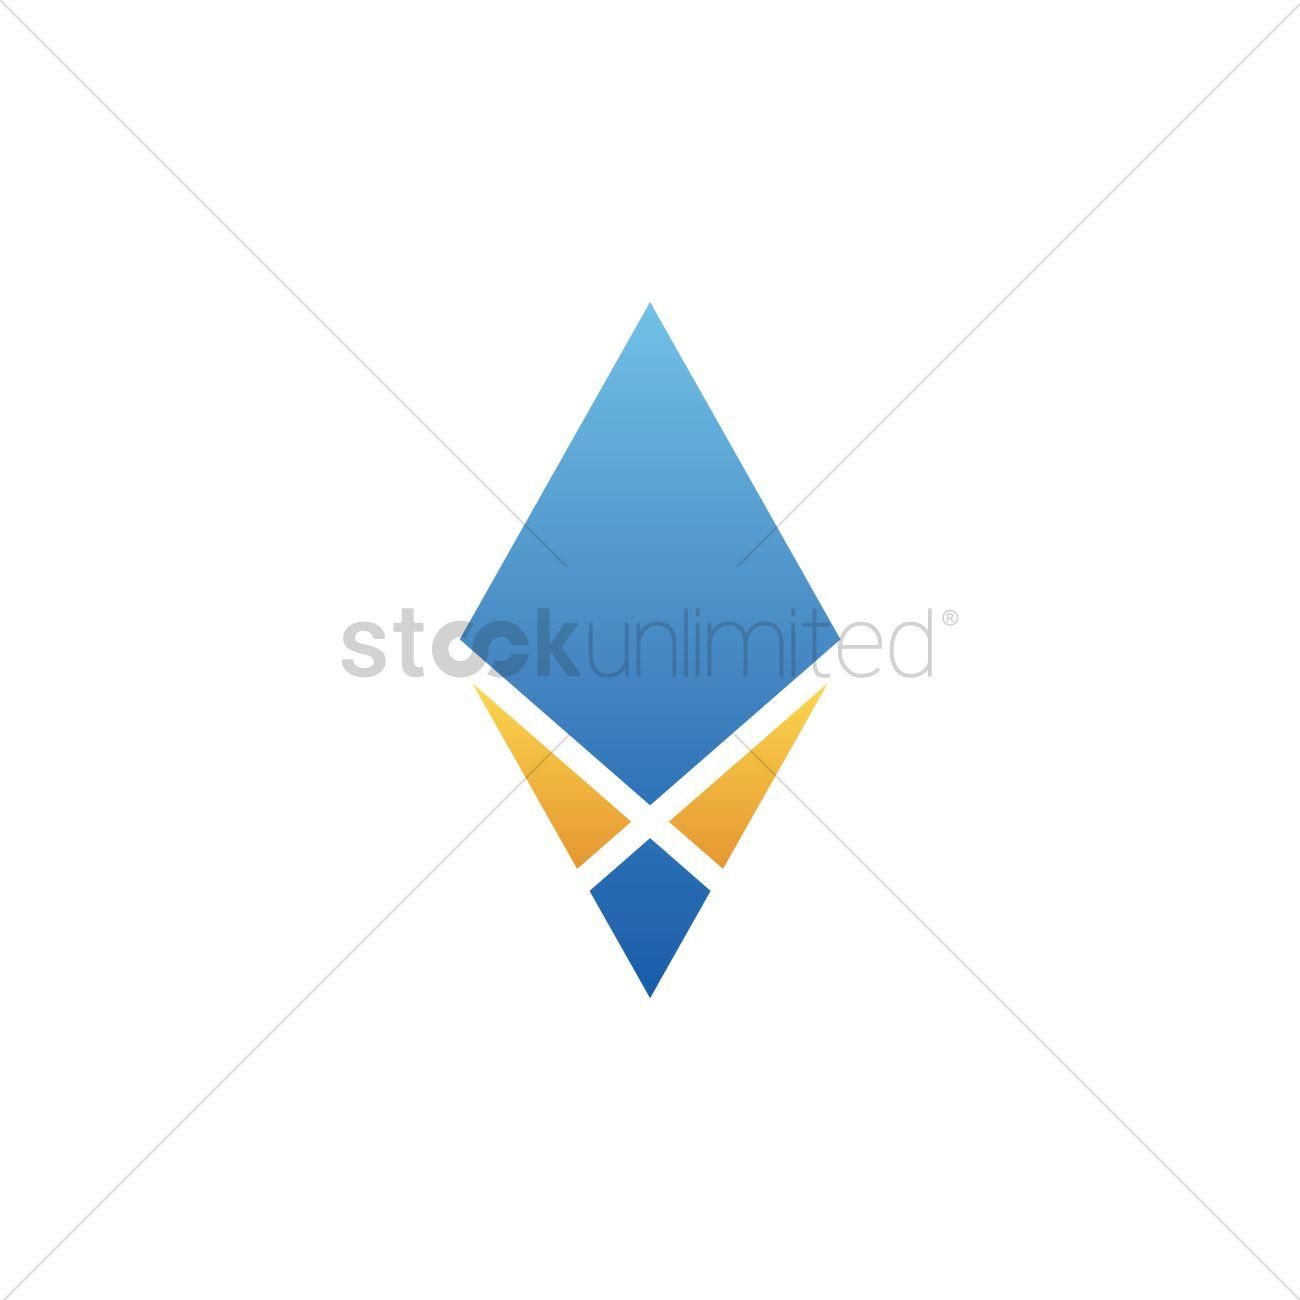 Rhombus Logo - Rhombus logo element Vector Image - 1938906 | StockUnlimited